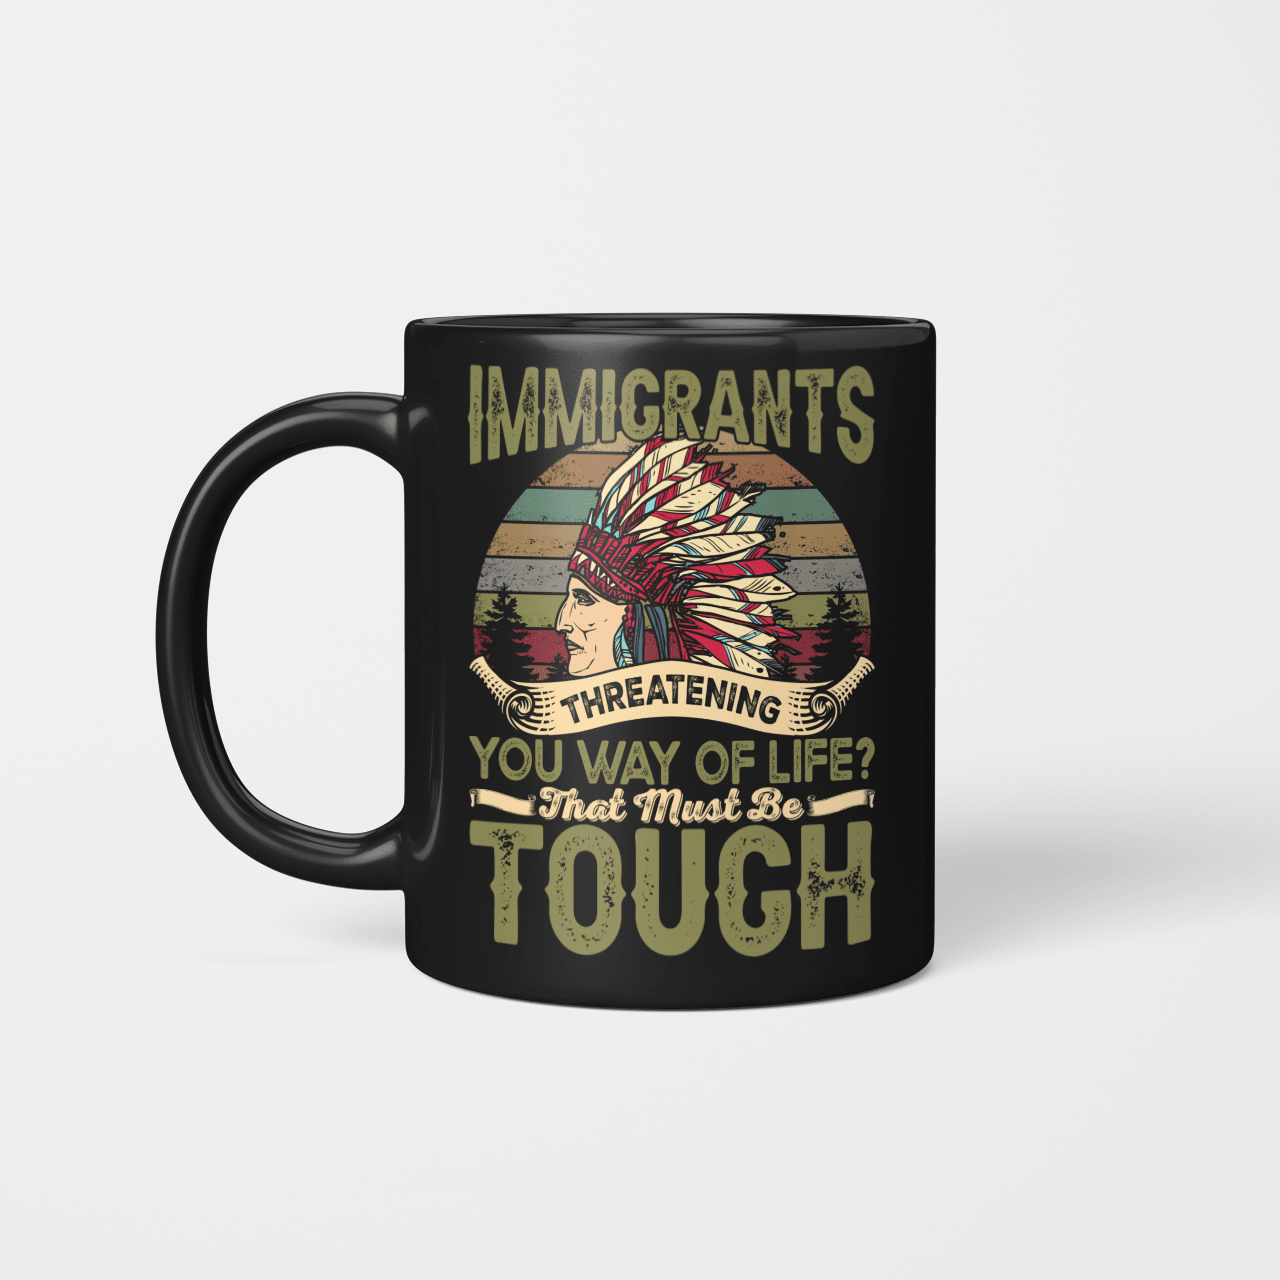 Immigrants Threatening mug